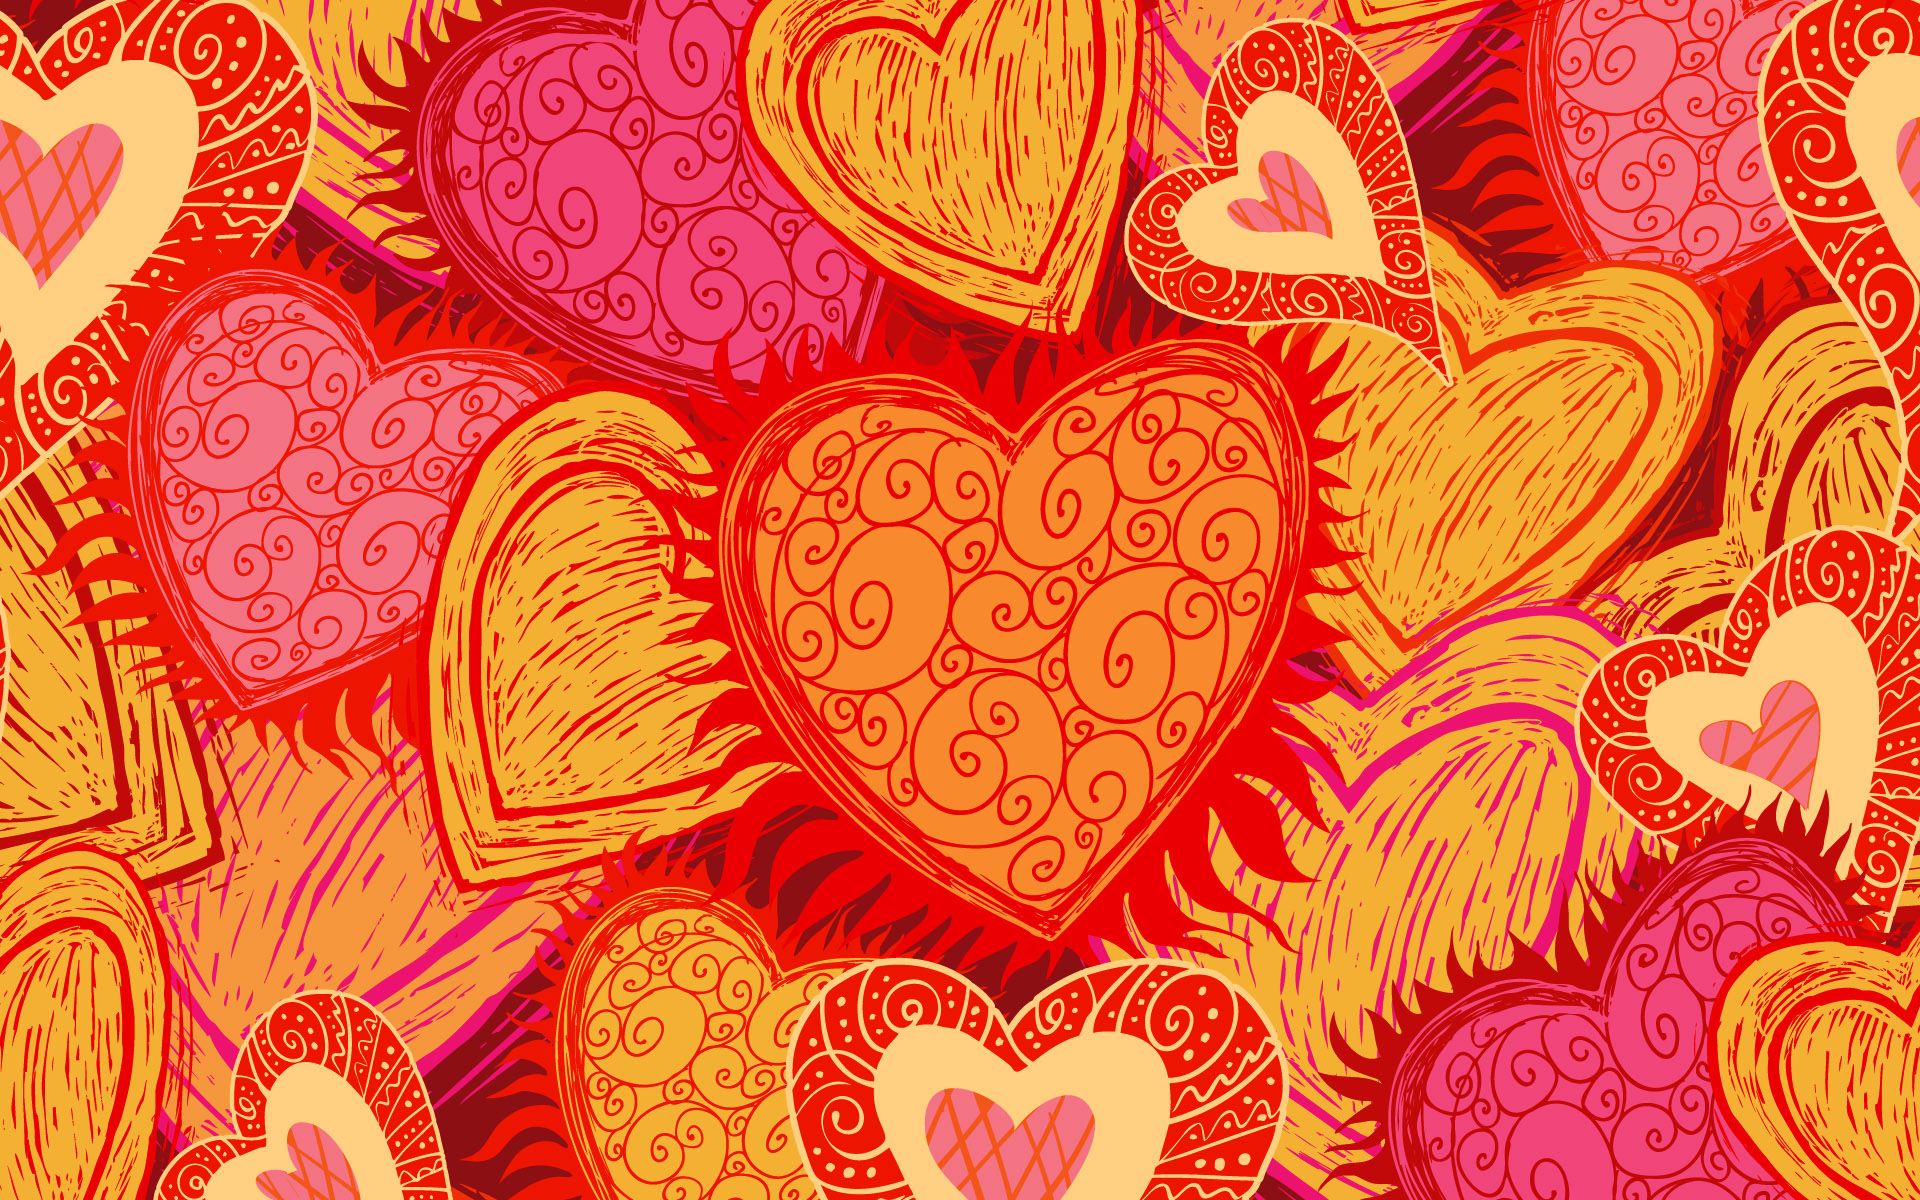 Previous, Love - Love hearts wallpaper